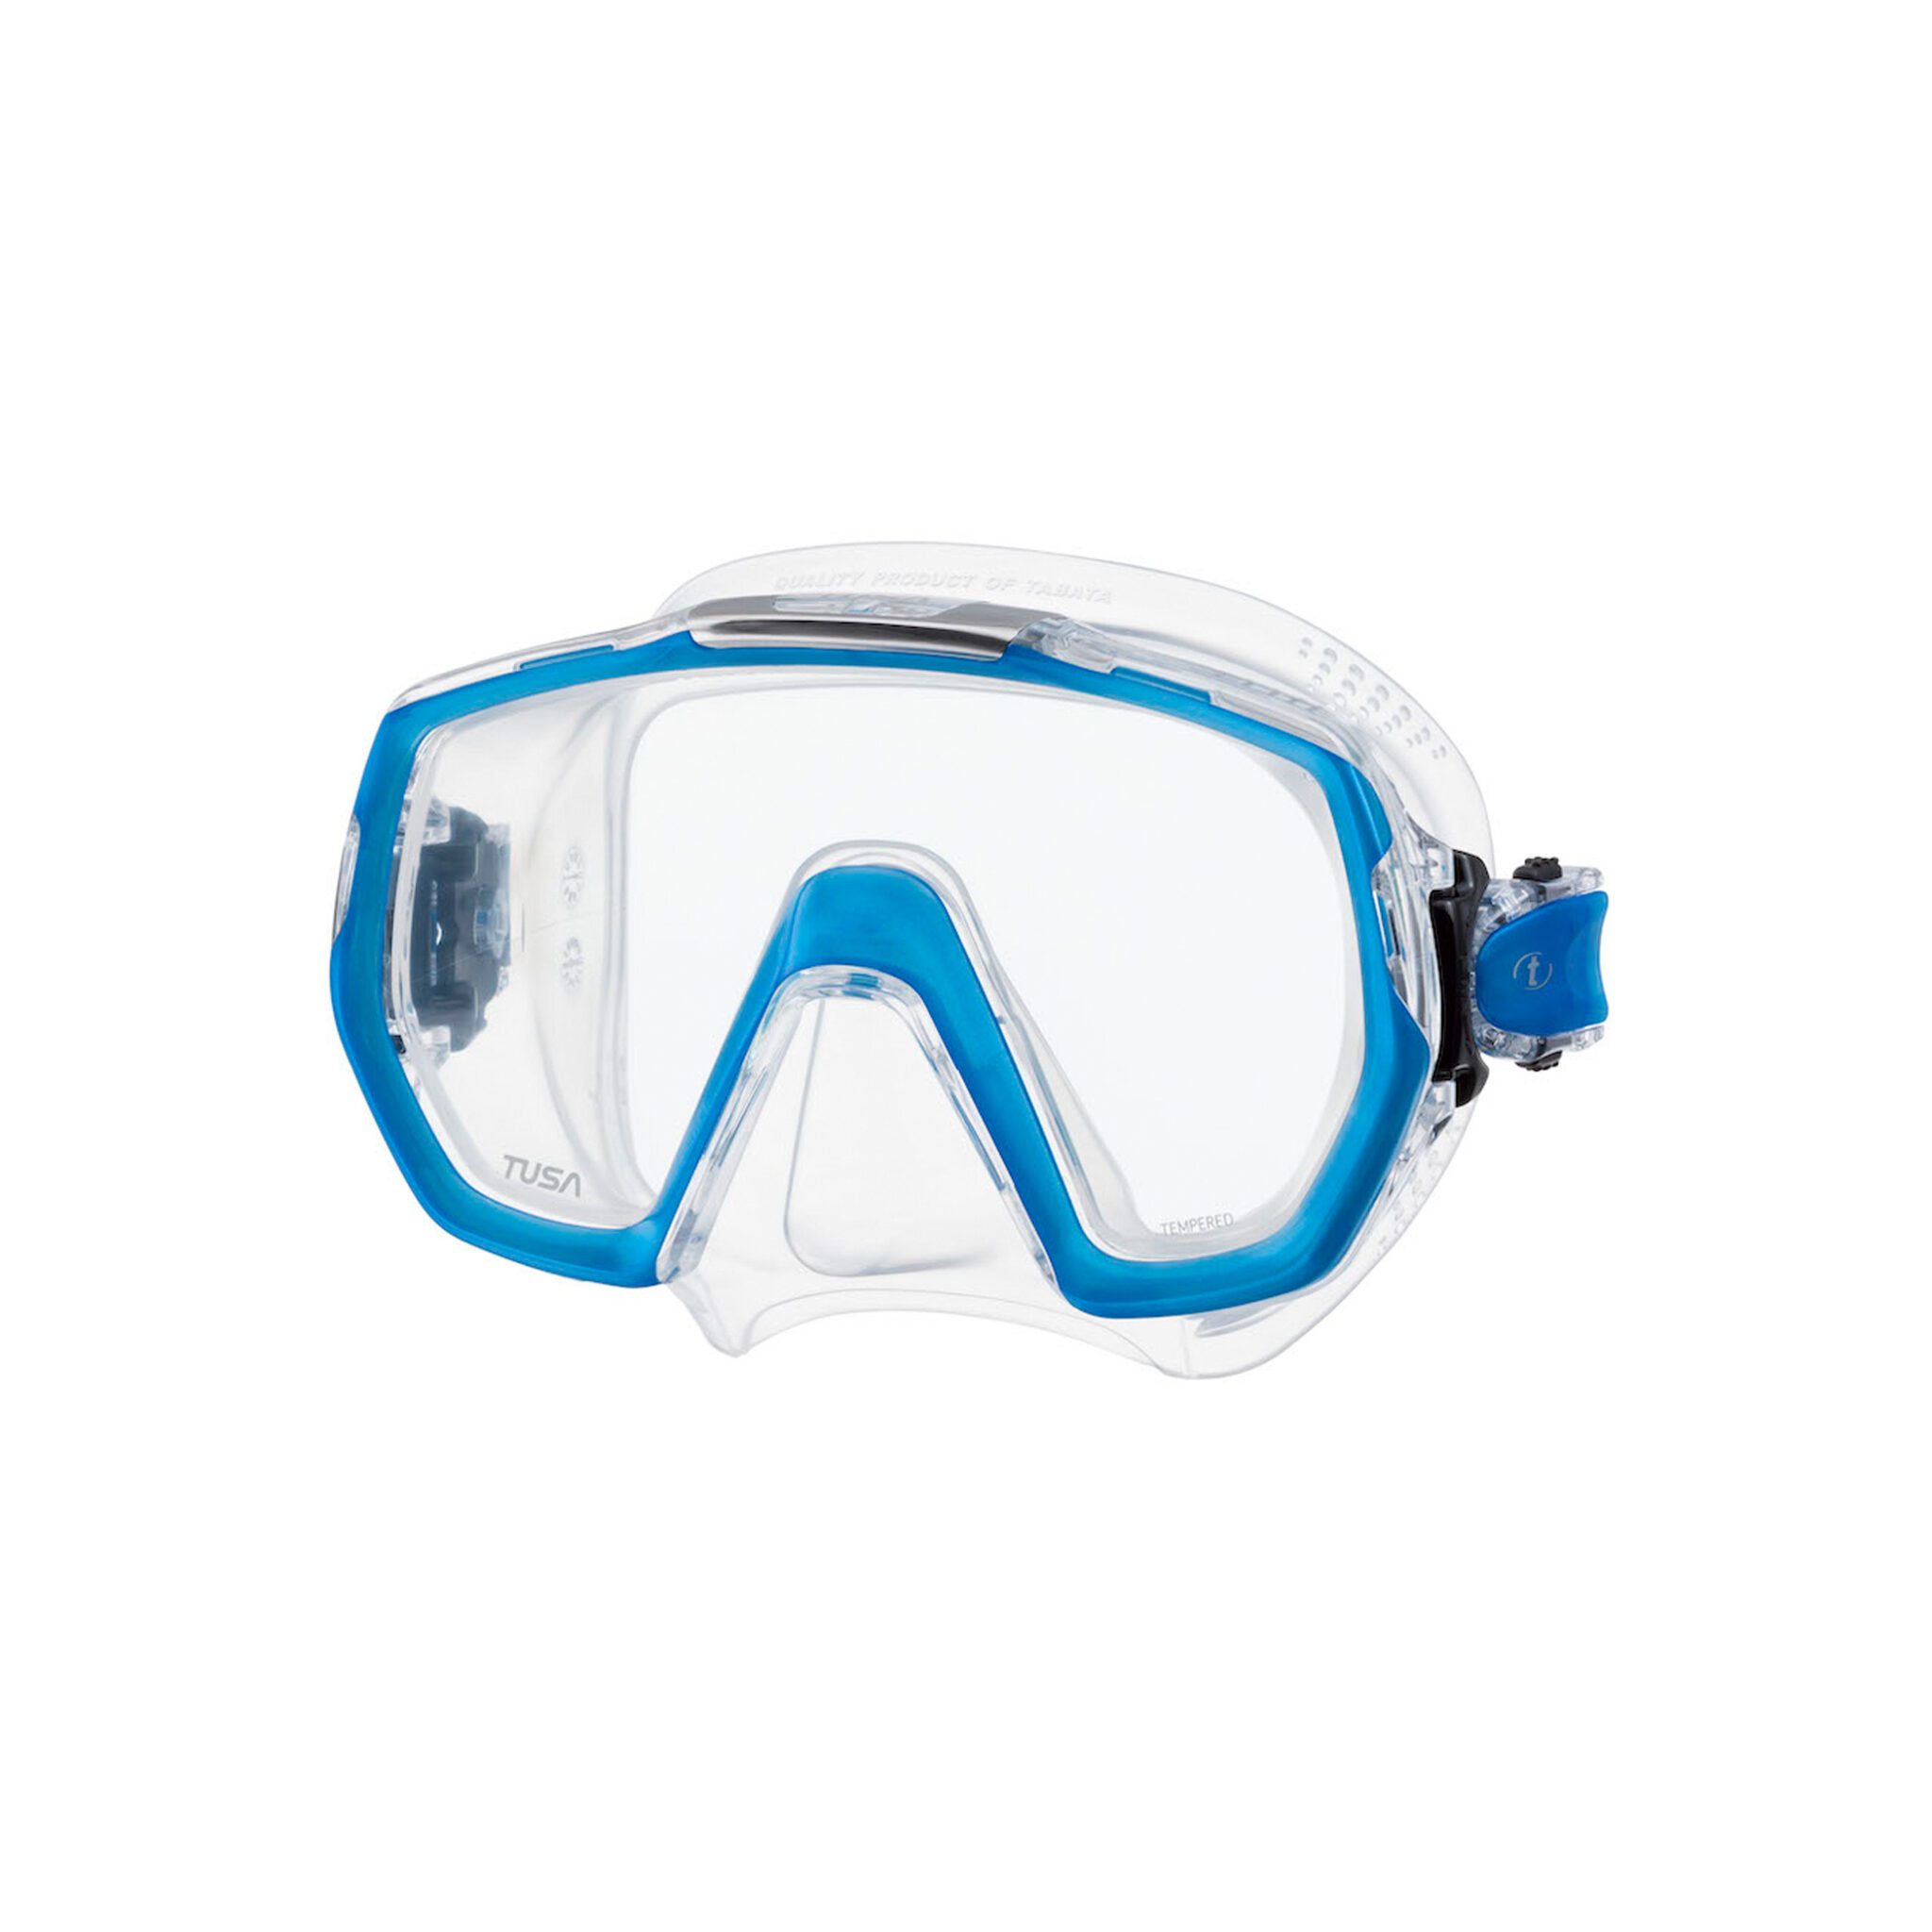 Buy The Best Snorkel Mask | Dive Gear Australia